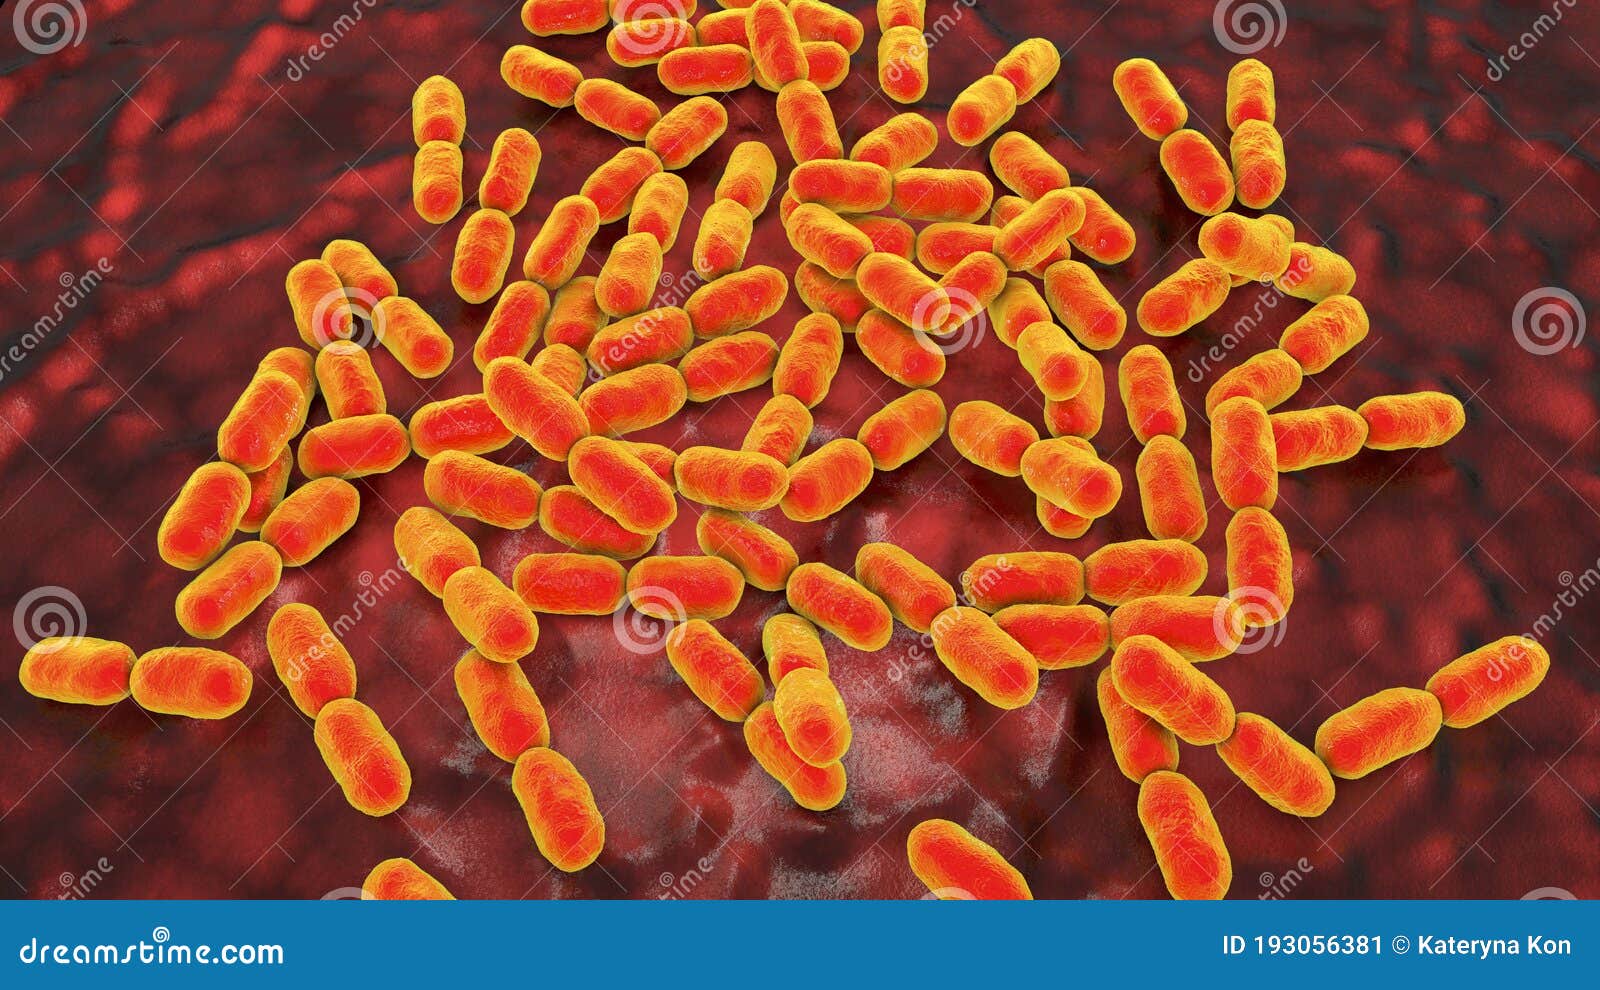 kingella bacteria, 